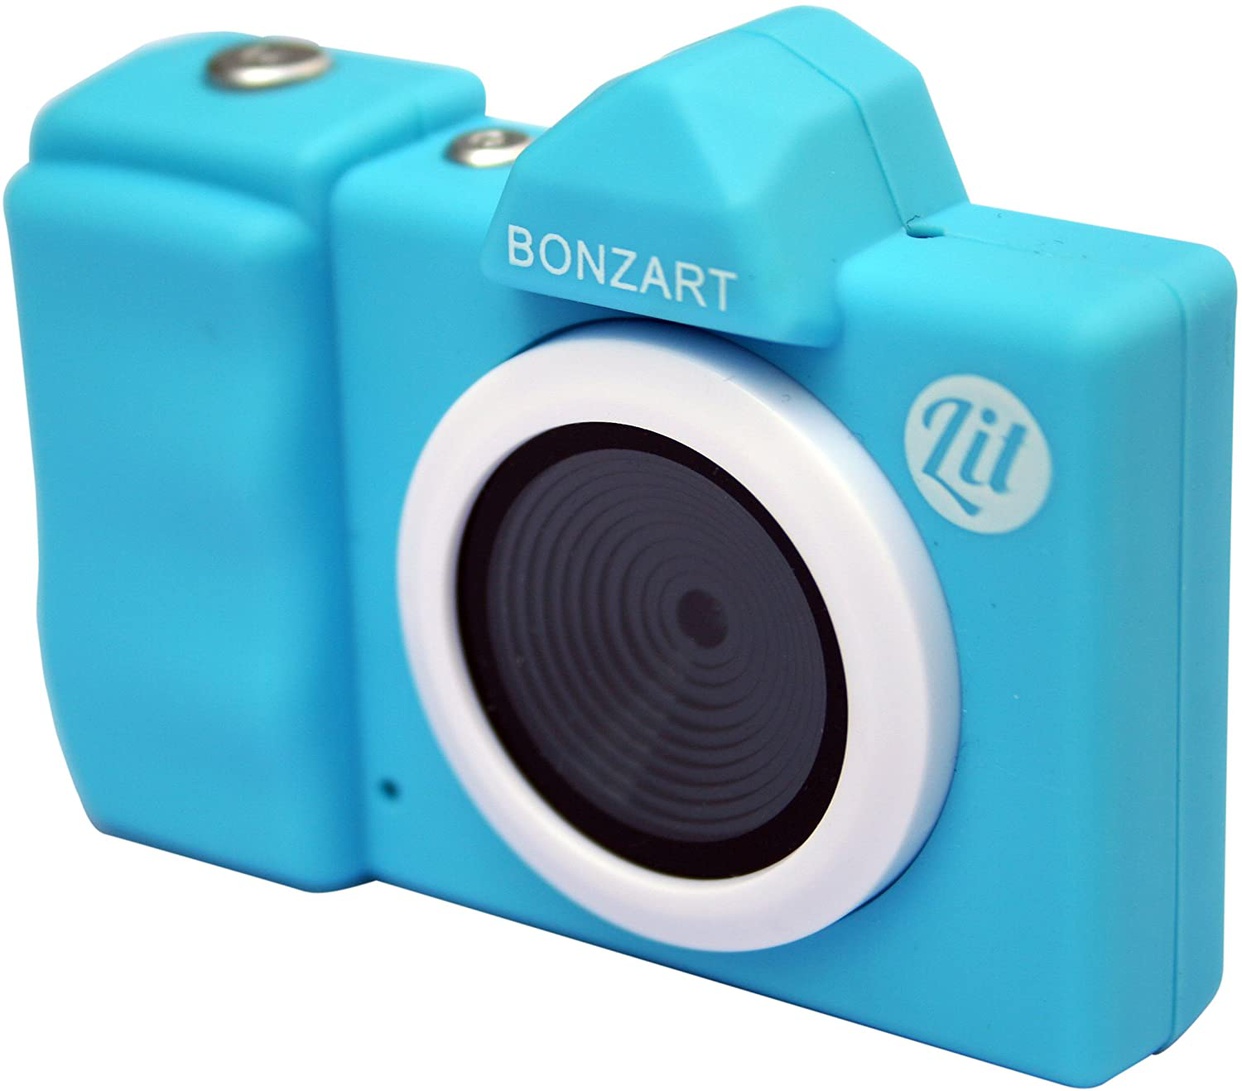 BONZART(ボンザート) Lit+の商品画像4 